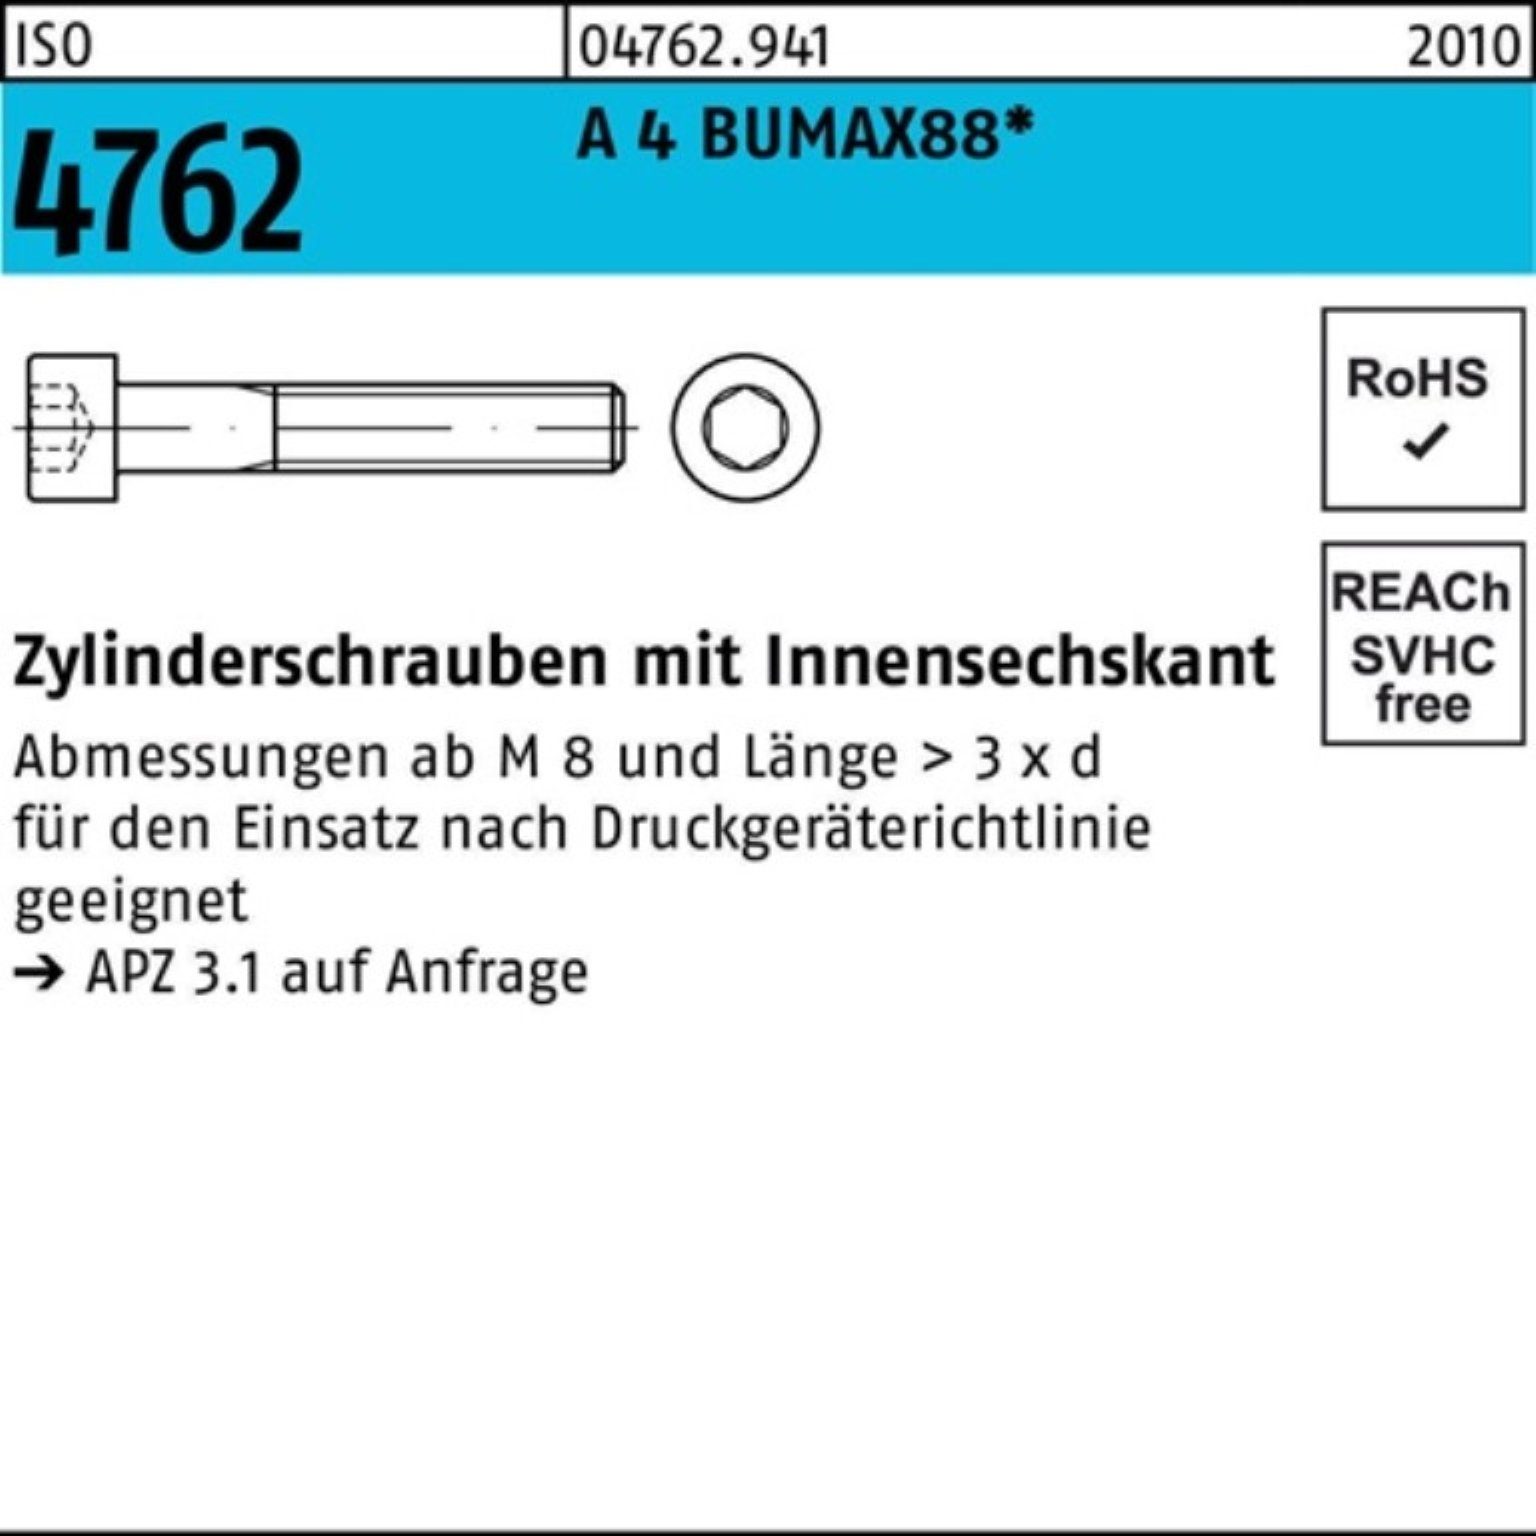 Bufab Zylinderschraube 100er Pack Zylinderschraube ISO 4762 Innen-6kt M10x 25 A 4 BUMAX88 50